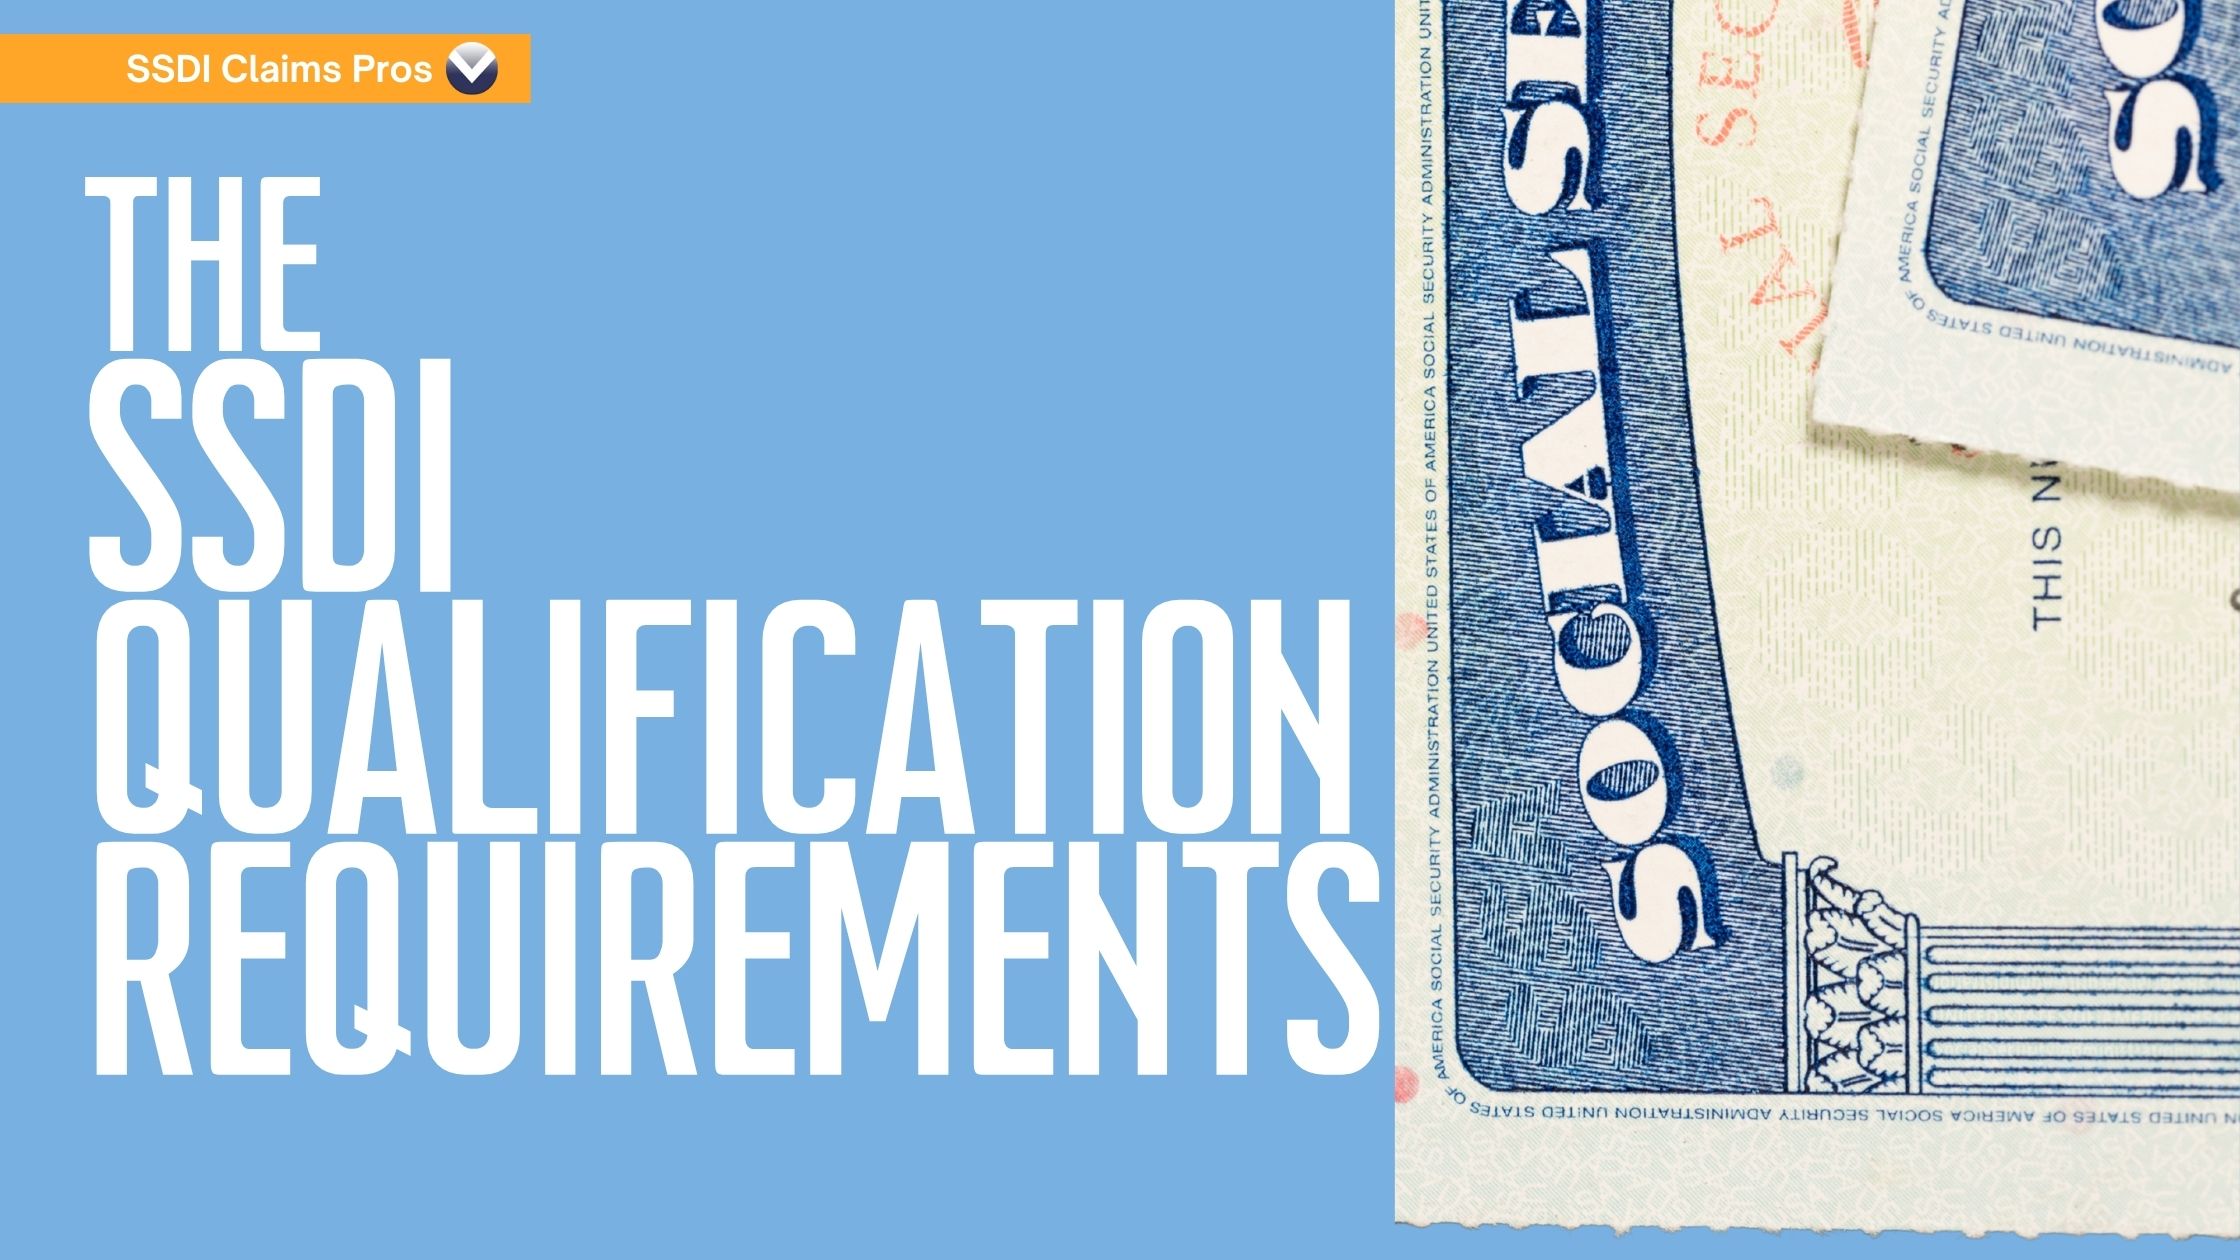 SSDI Qualification Requirements Blog header image